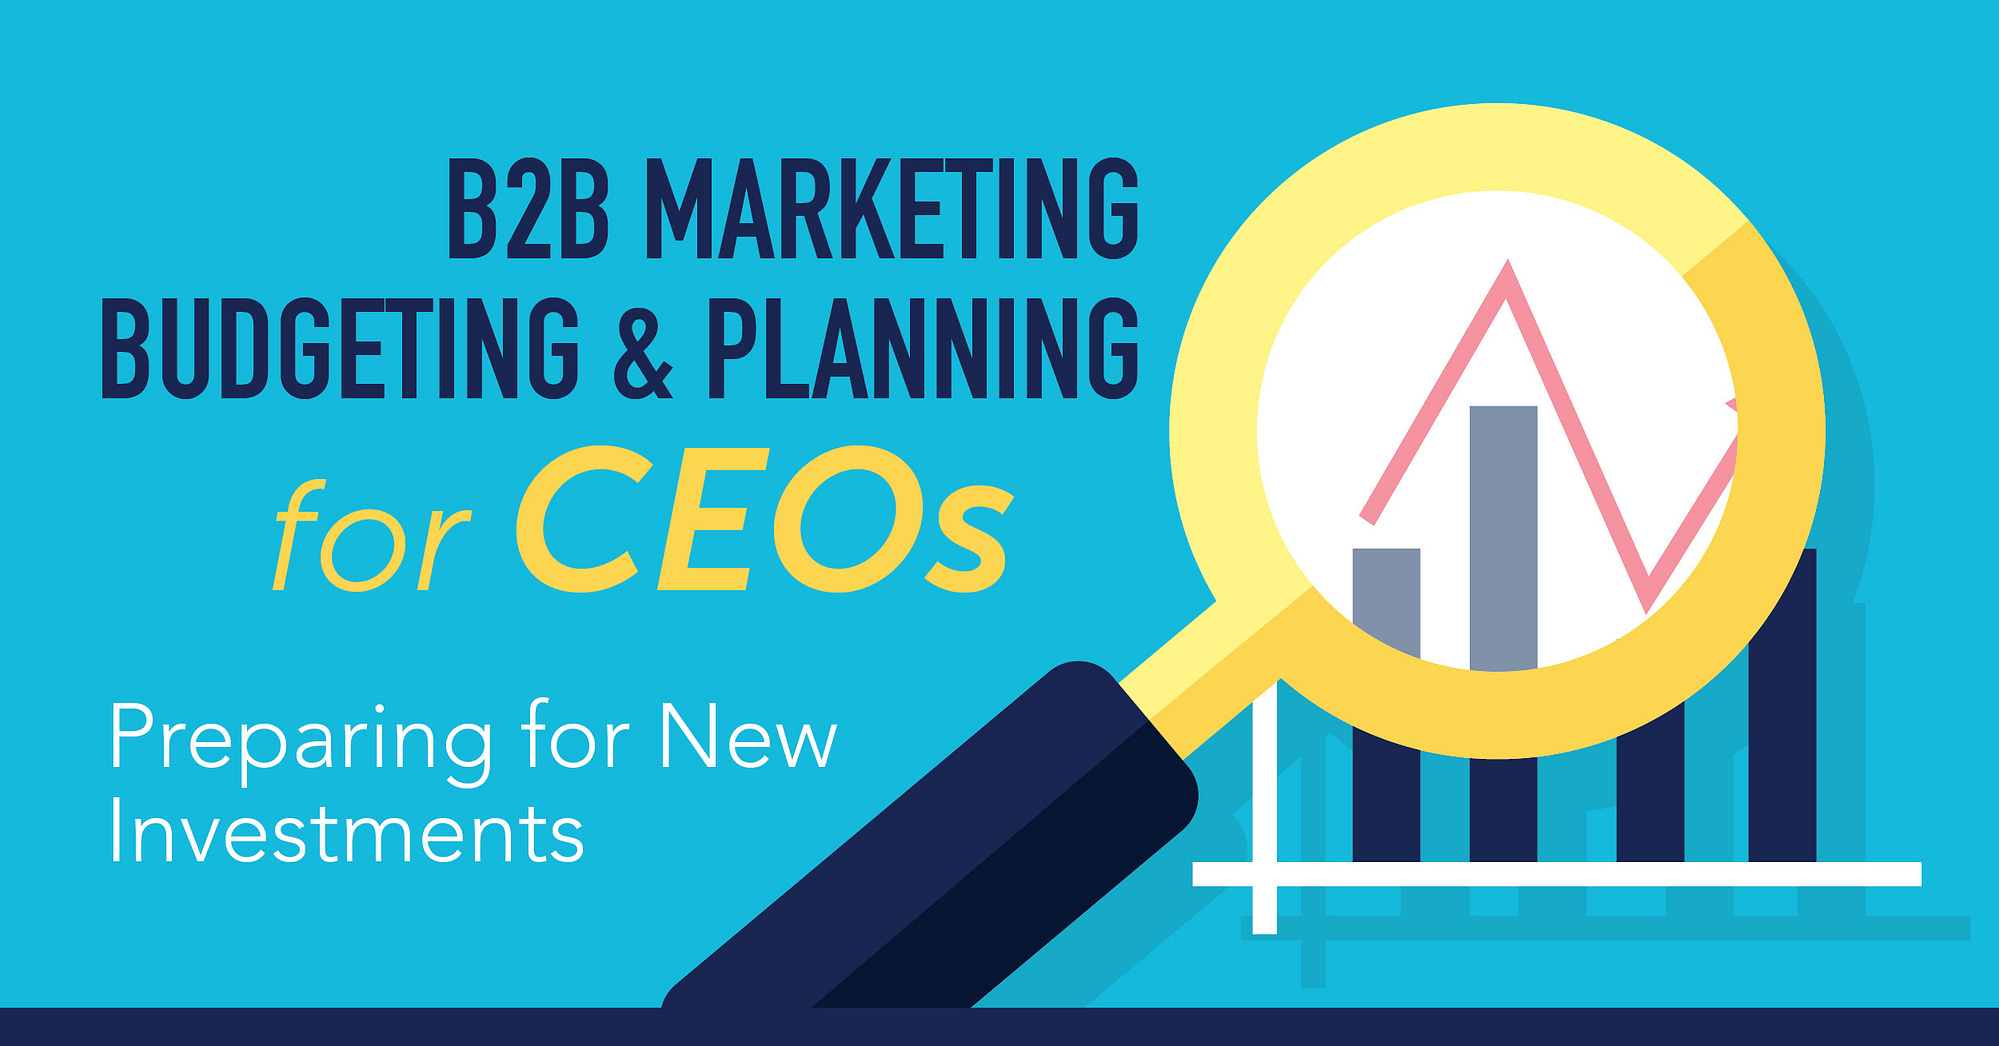 B2B marketing budgeting and planning